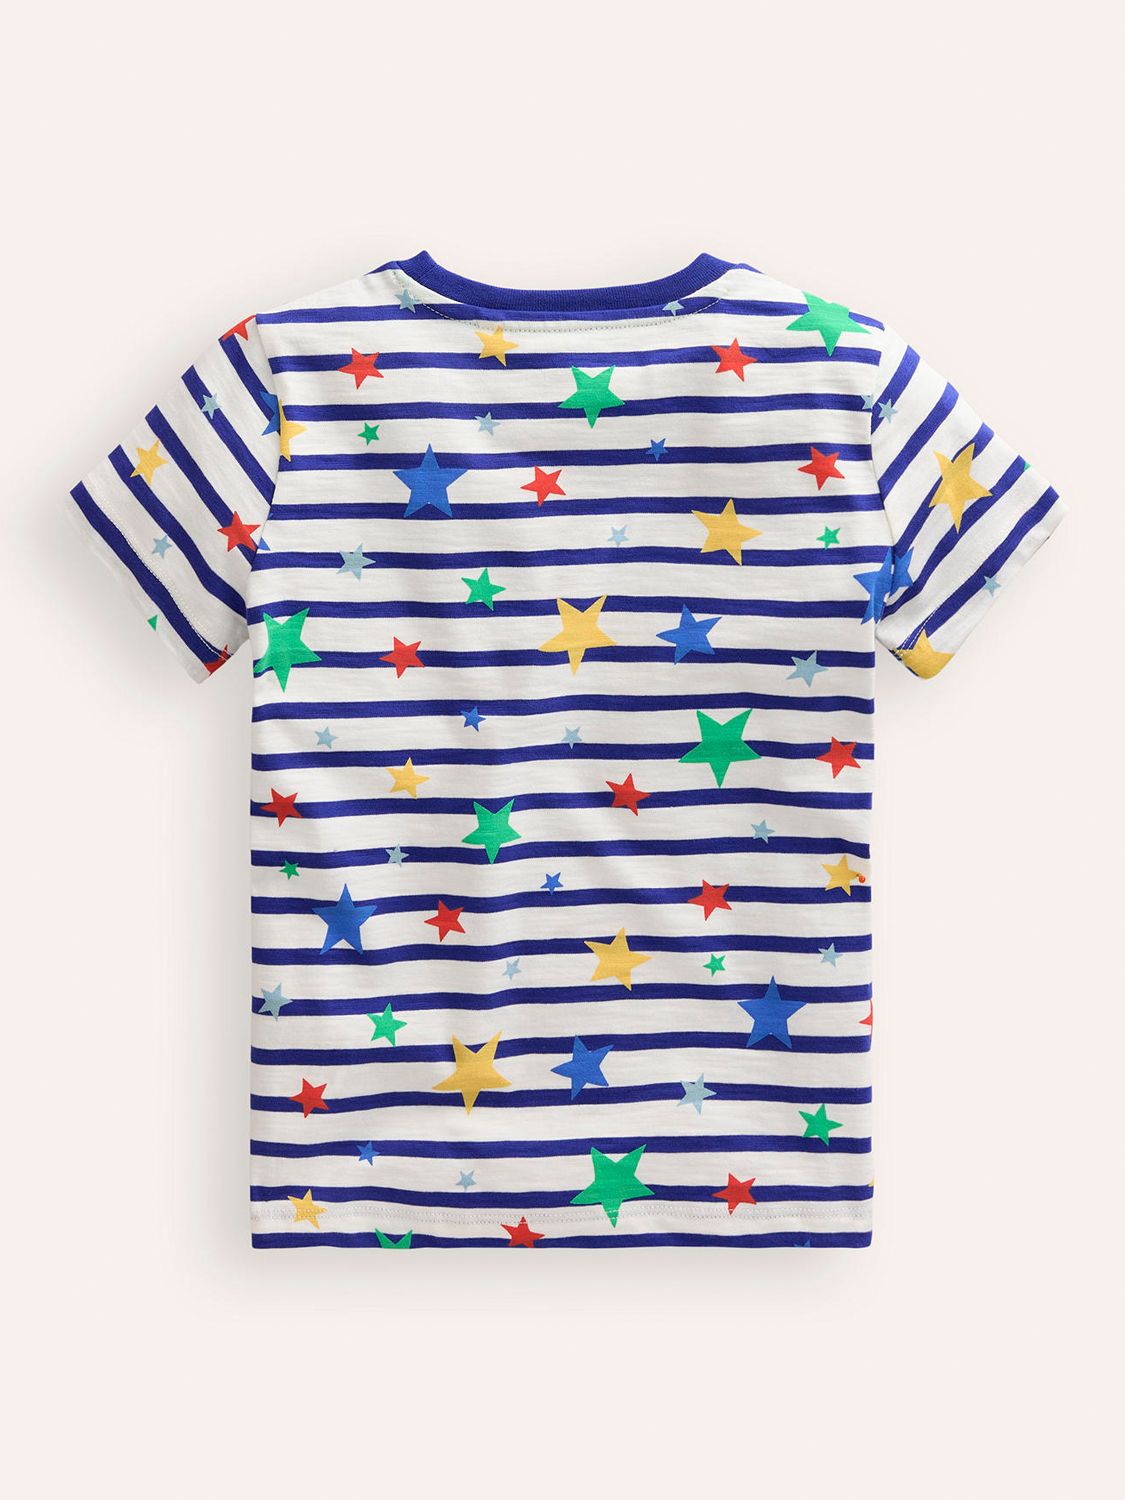 Mini Boden Kids' Stripe and Star Cotton T-Shirt, Multi, 12-18 months